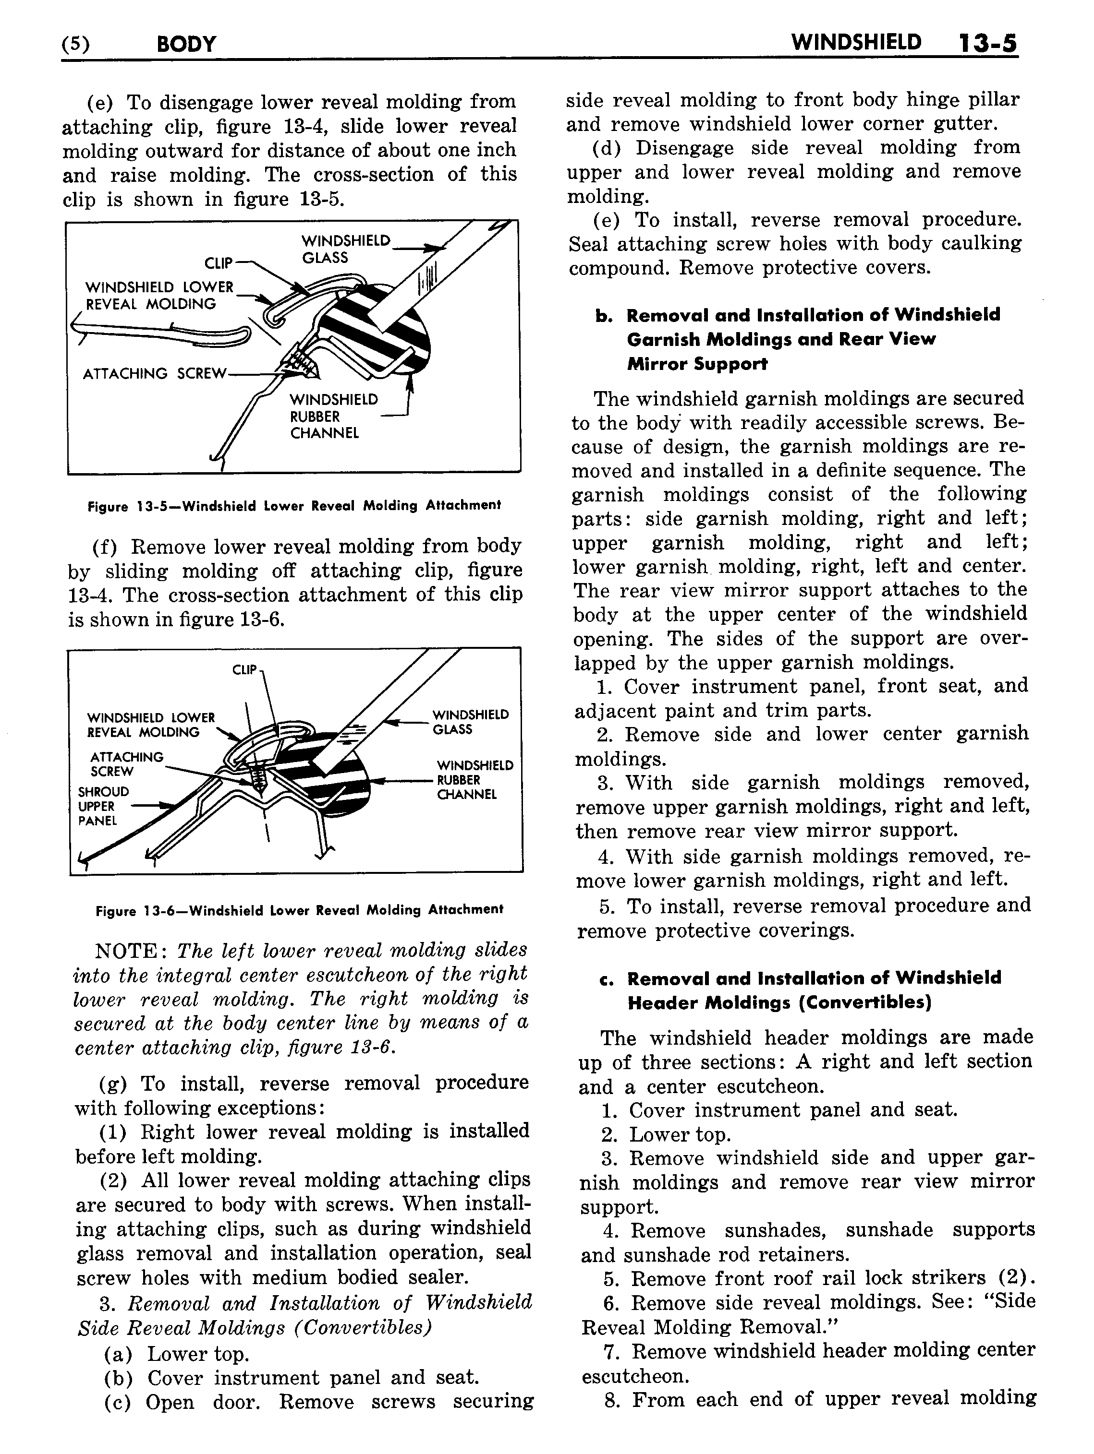 n_1957 Buick Body Service Manual-007-007.jpg